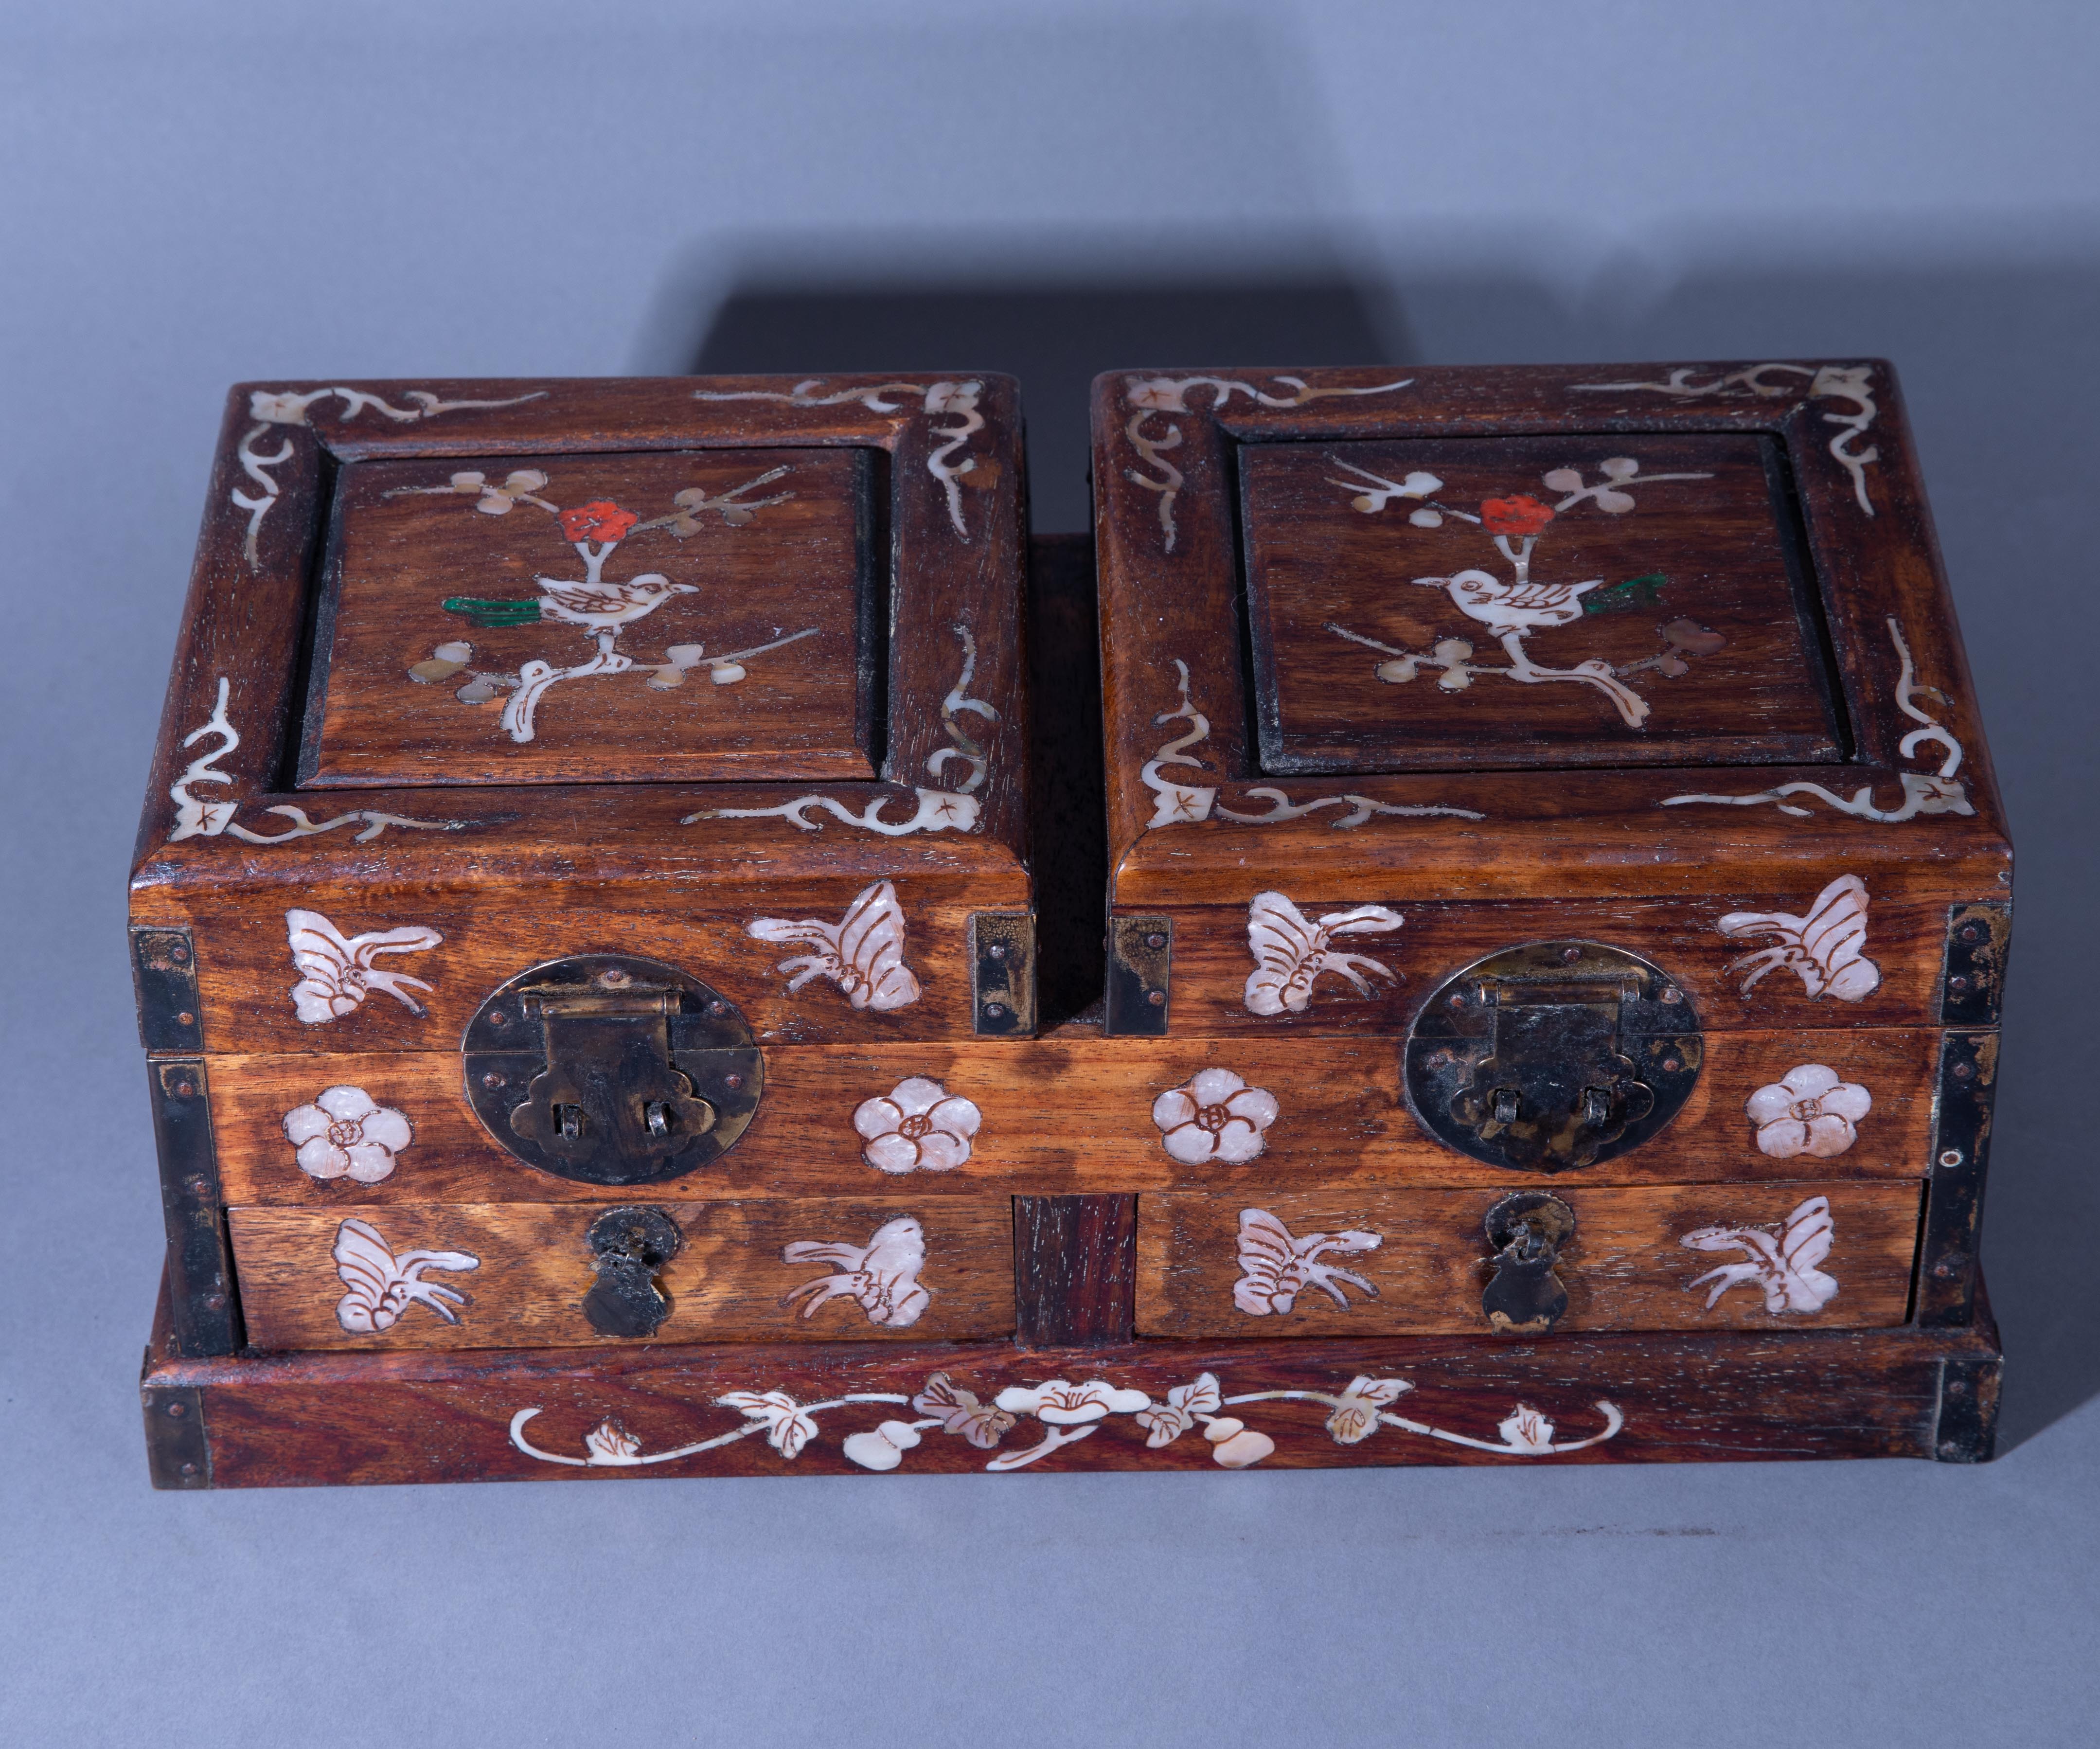 dressing box inlaid with shell中国古代黄花梨镶嵌贝壳梳妆盒